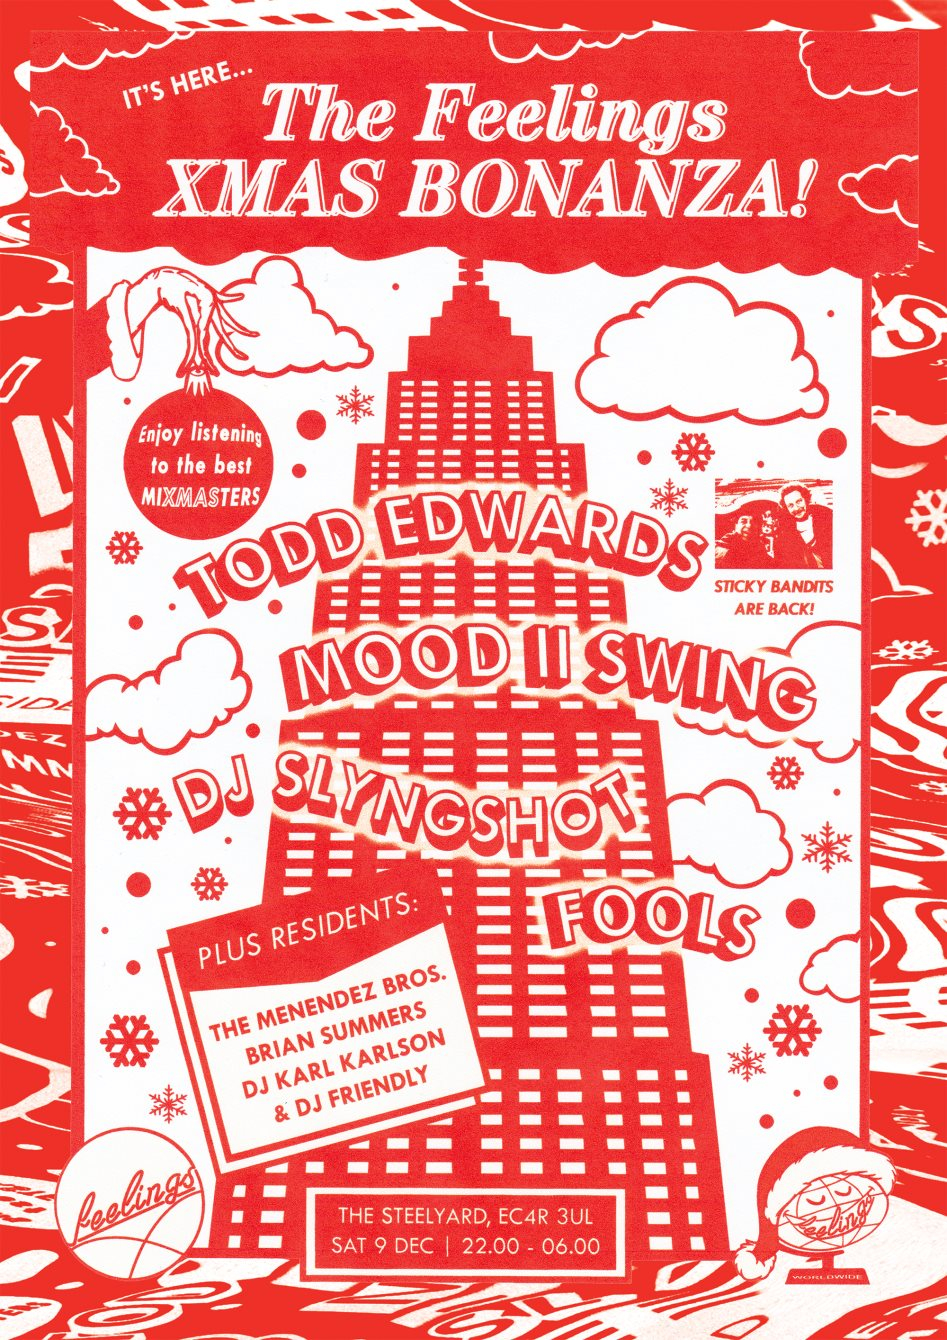 Feelings Xmas Bonanza with Todd Edwards, Mood II Swing, DJ Slyngshot, Fools & More - Flyer back